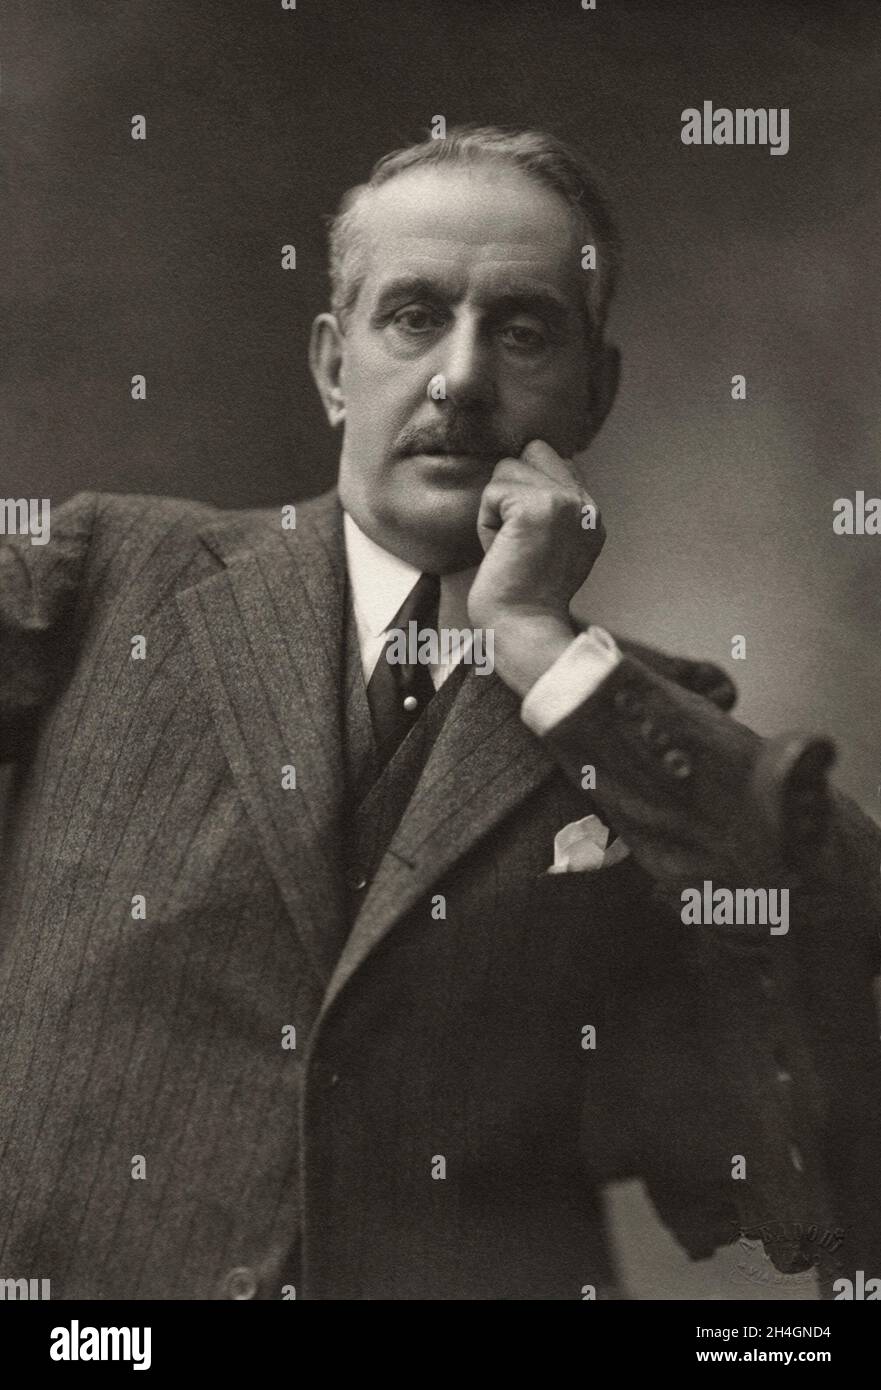 A portrait of the Italian opera composer Giacomo Puccini Stock Photo